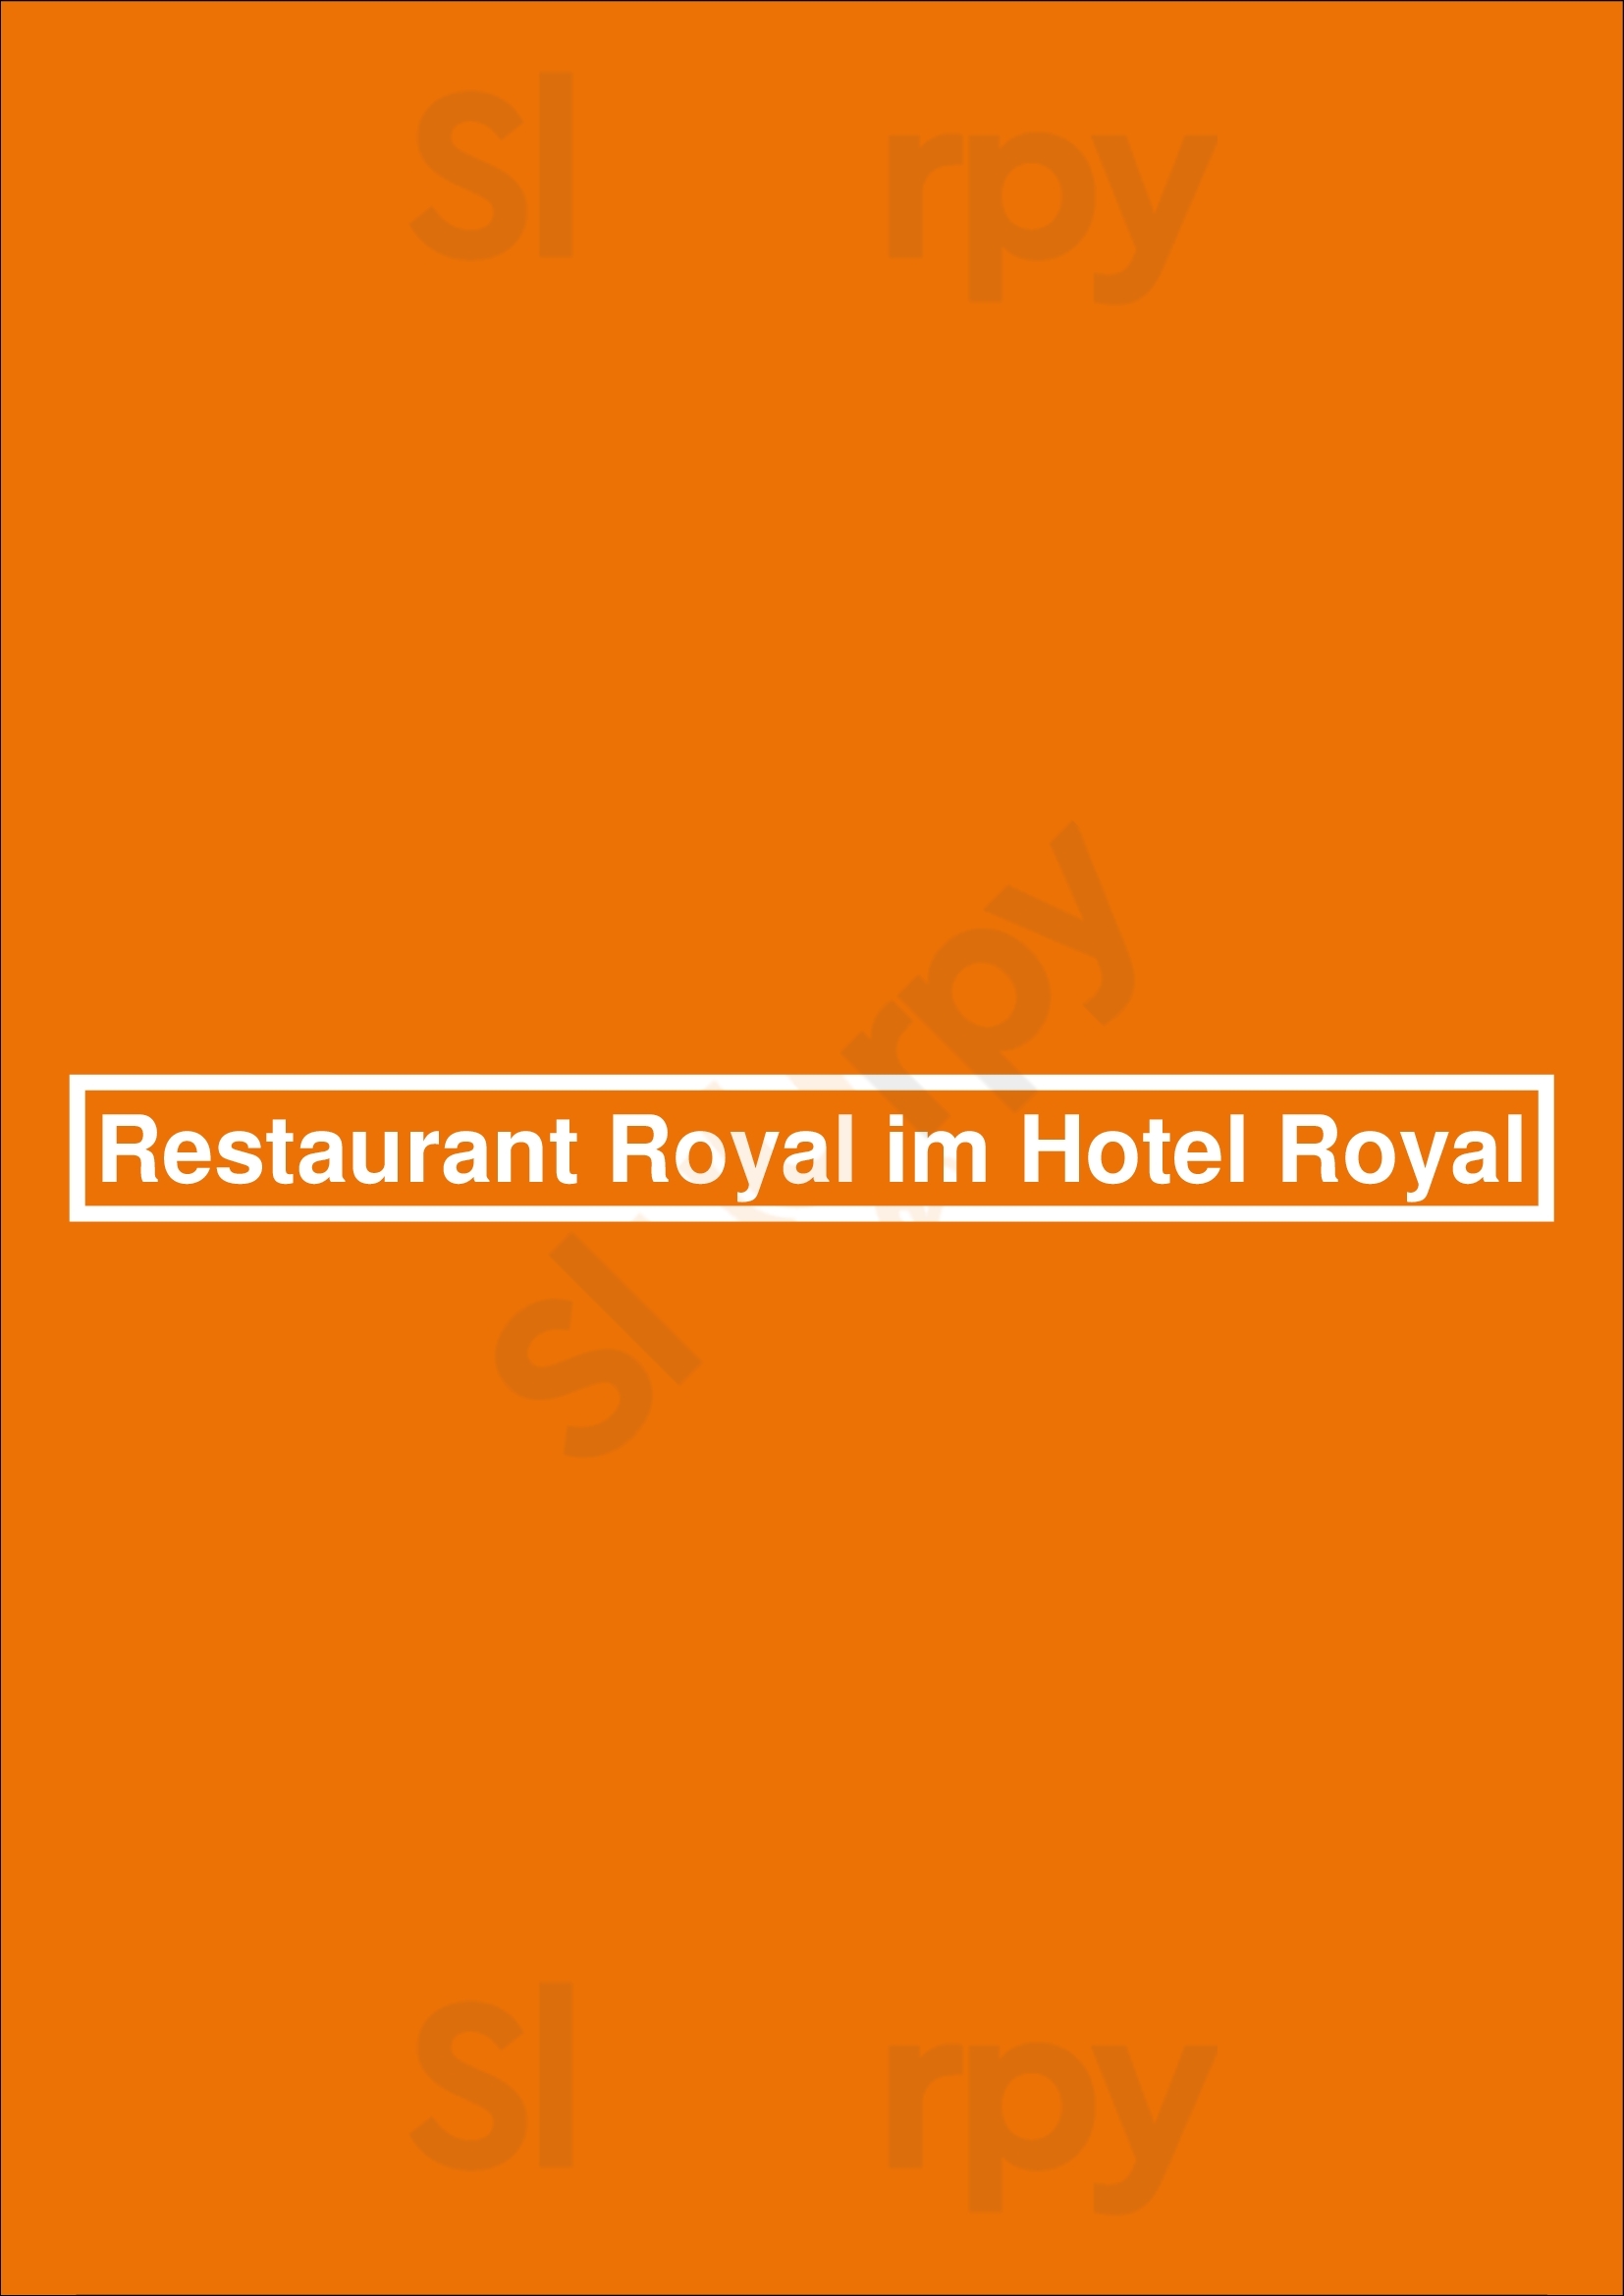 Restaurant Royal Im Hotel Royal Stuttgart Menu - 1